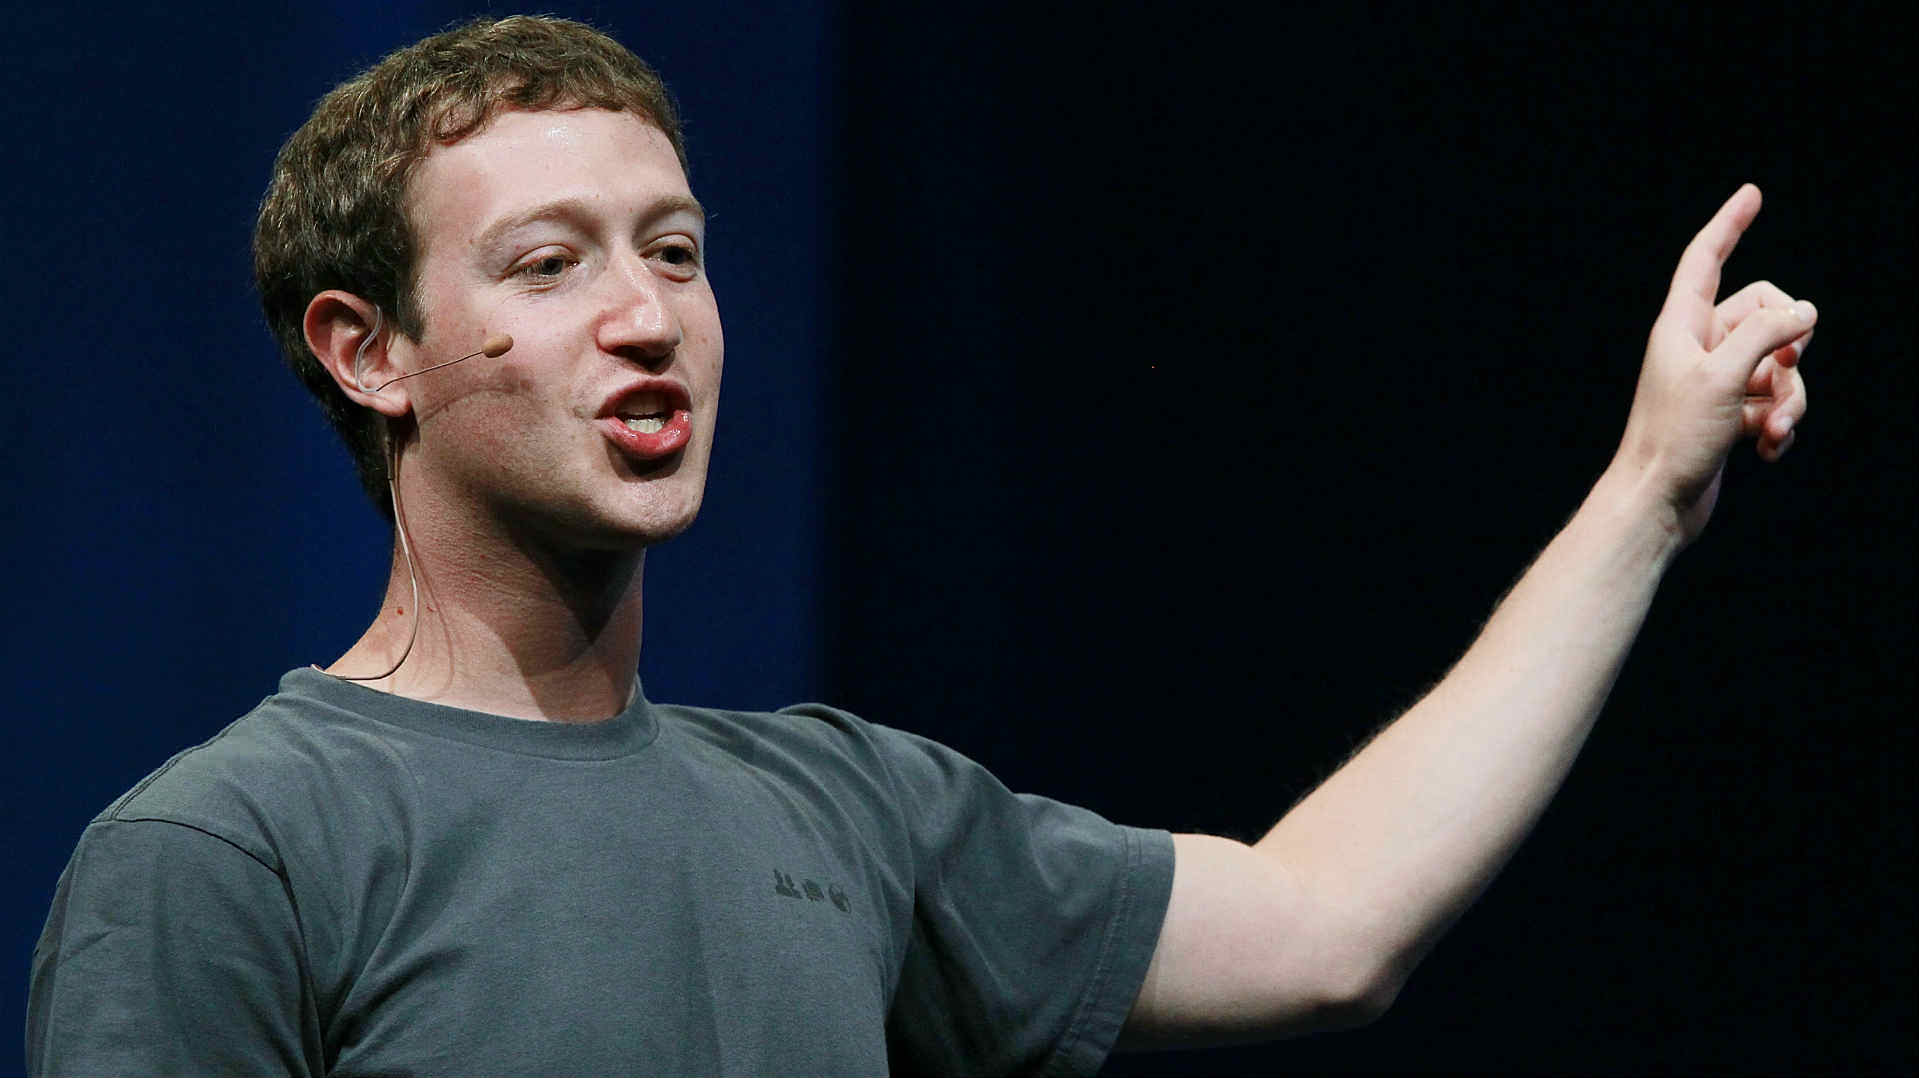 http://guardianlv.com/wp-content/uploads/2014/02/Mark-Zuckerberg1.jpg